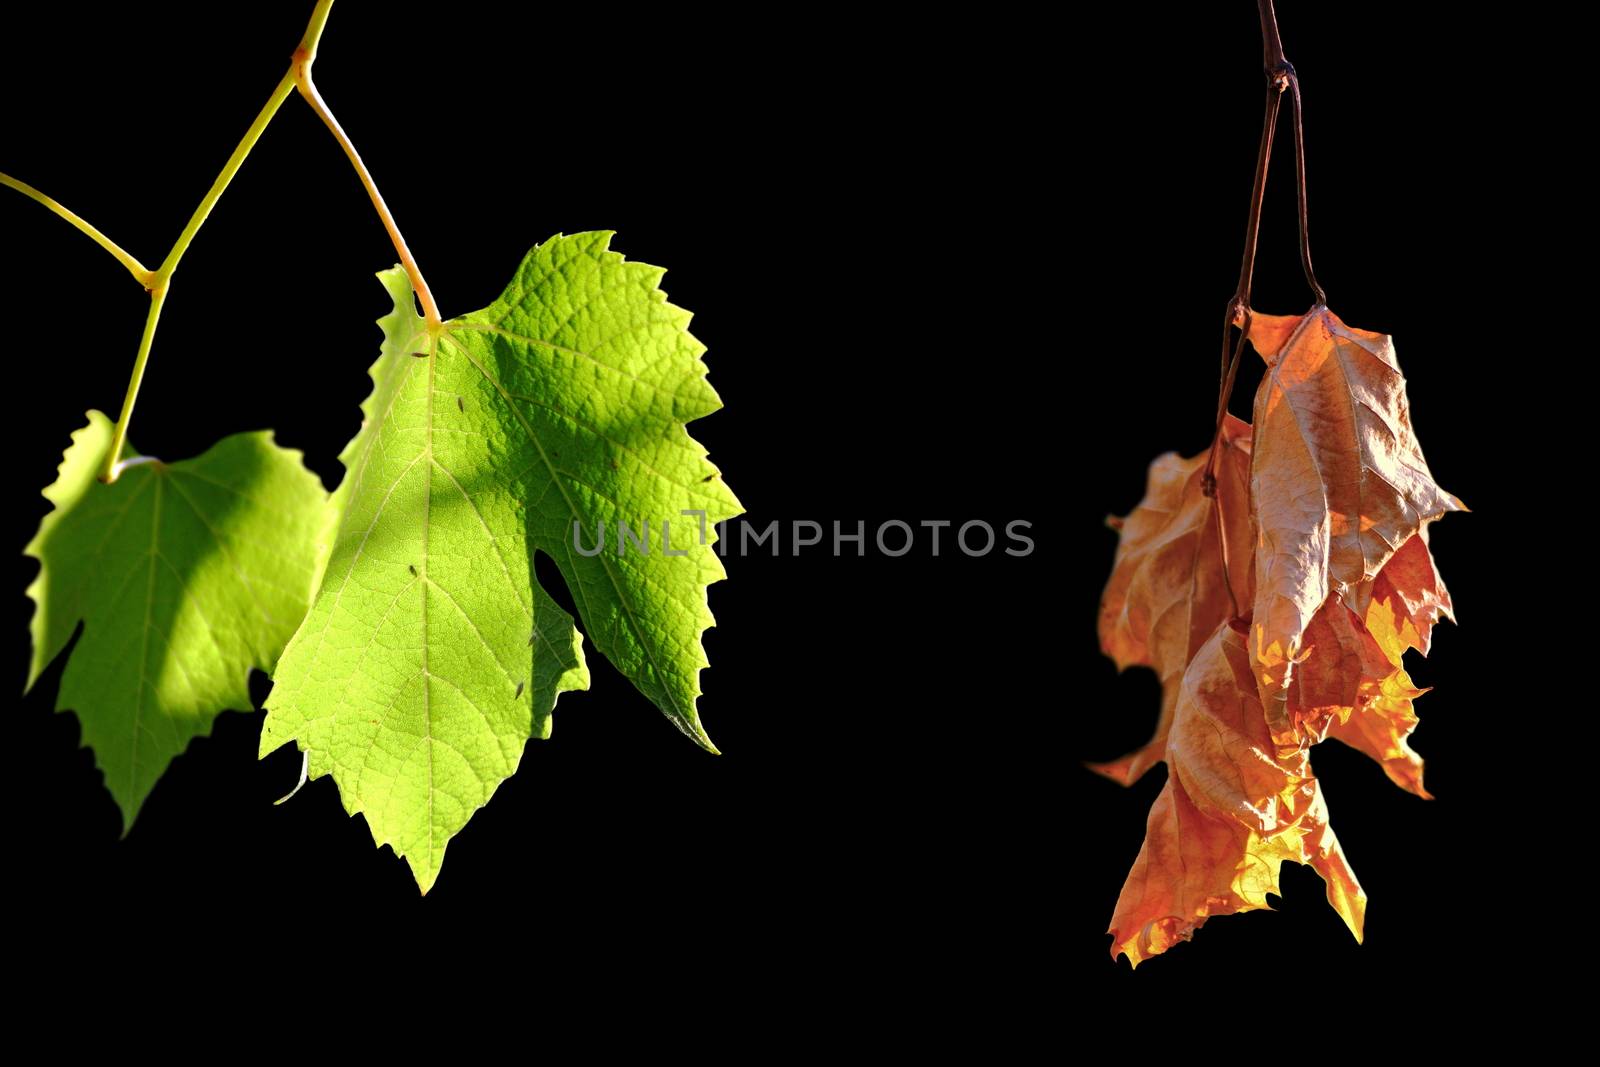 contrast between alive and dead vineyard leaves over dark background